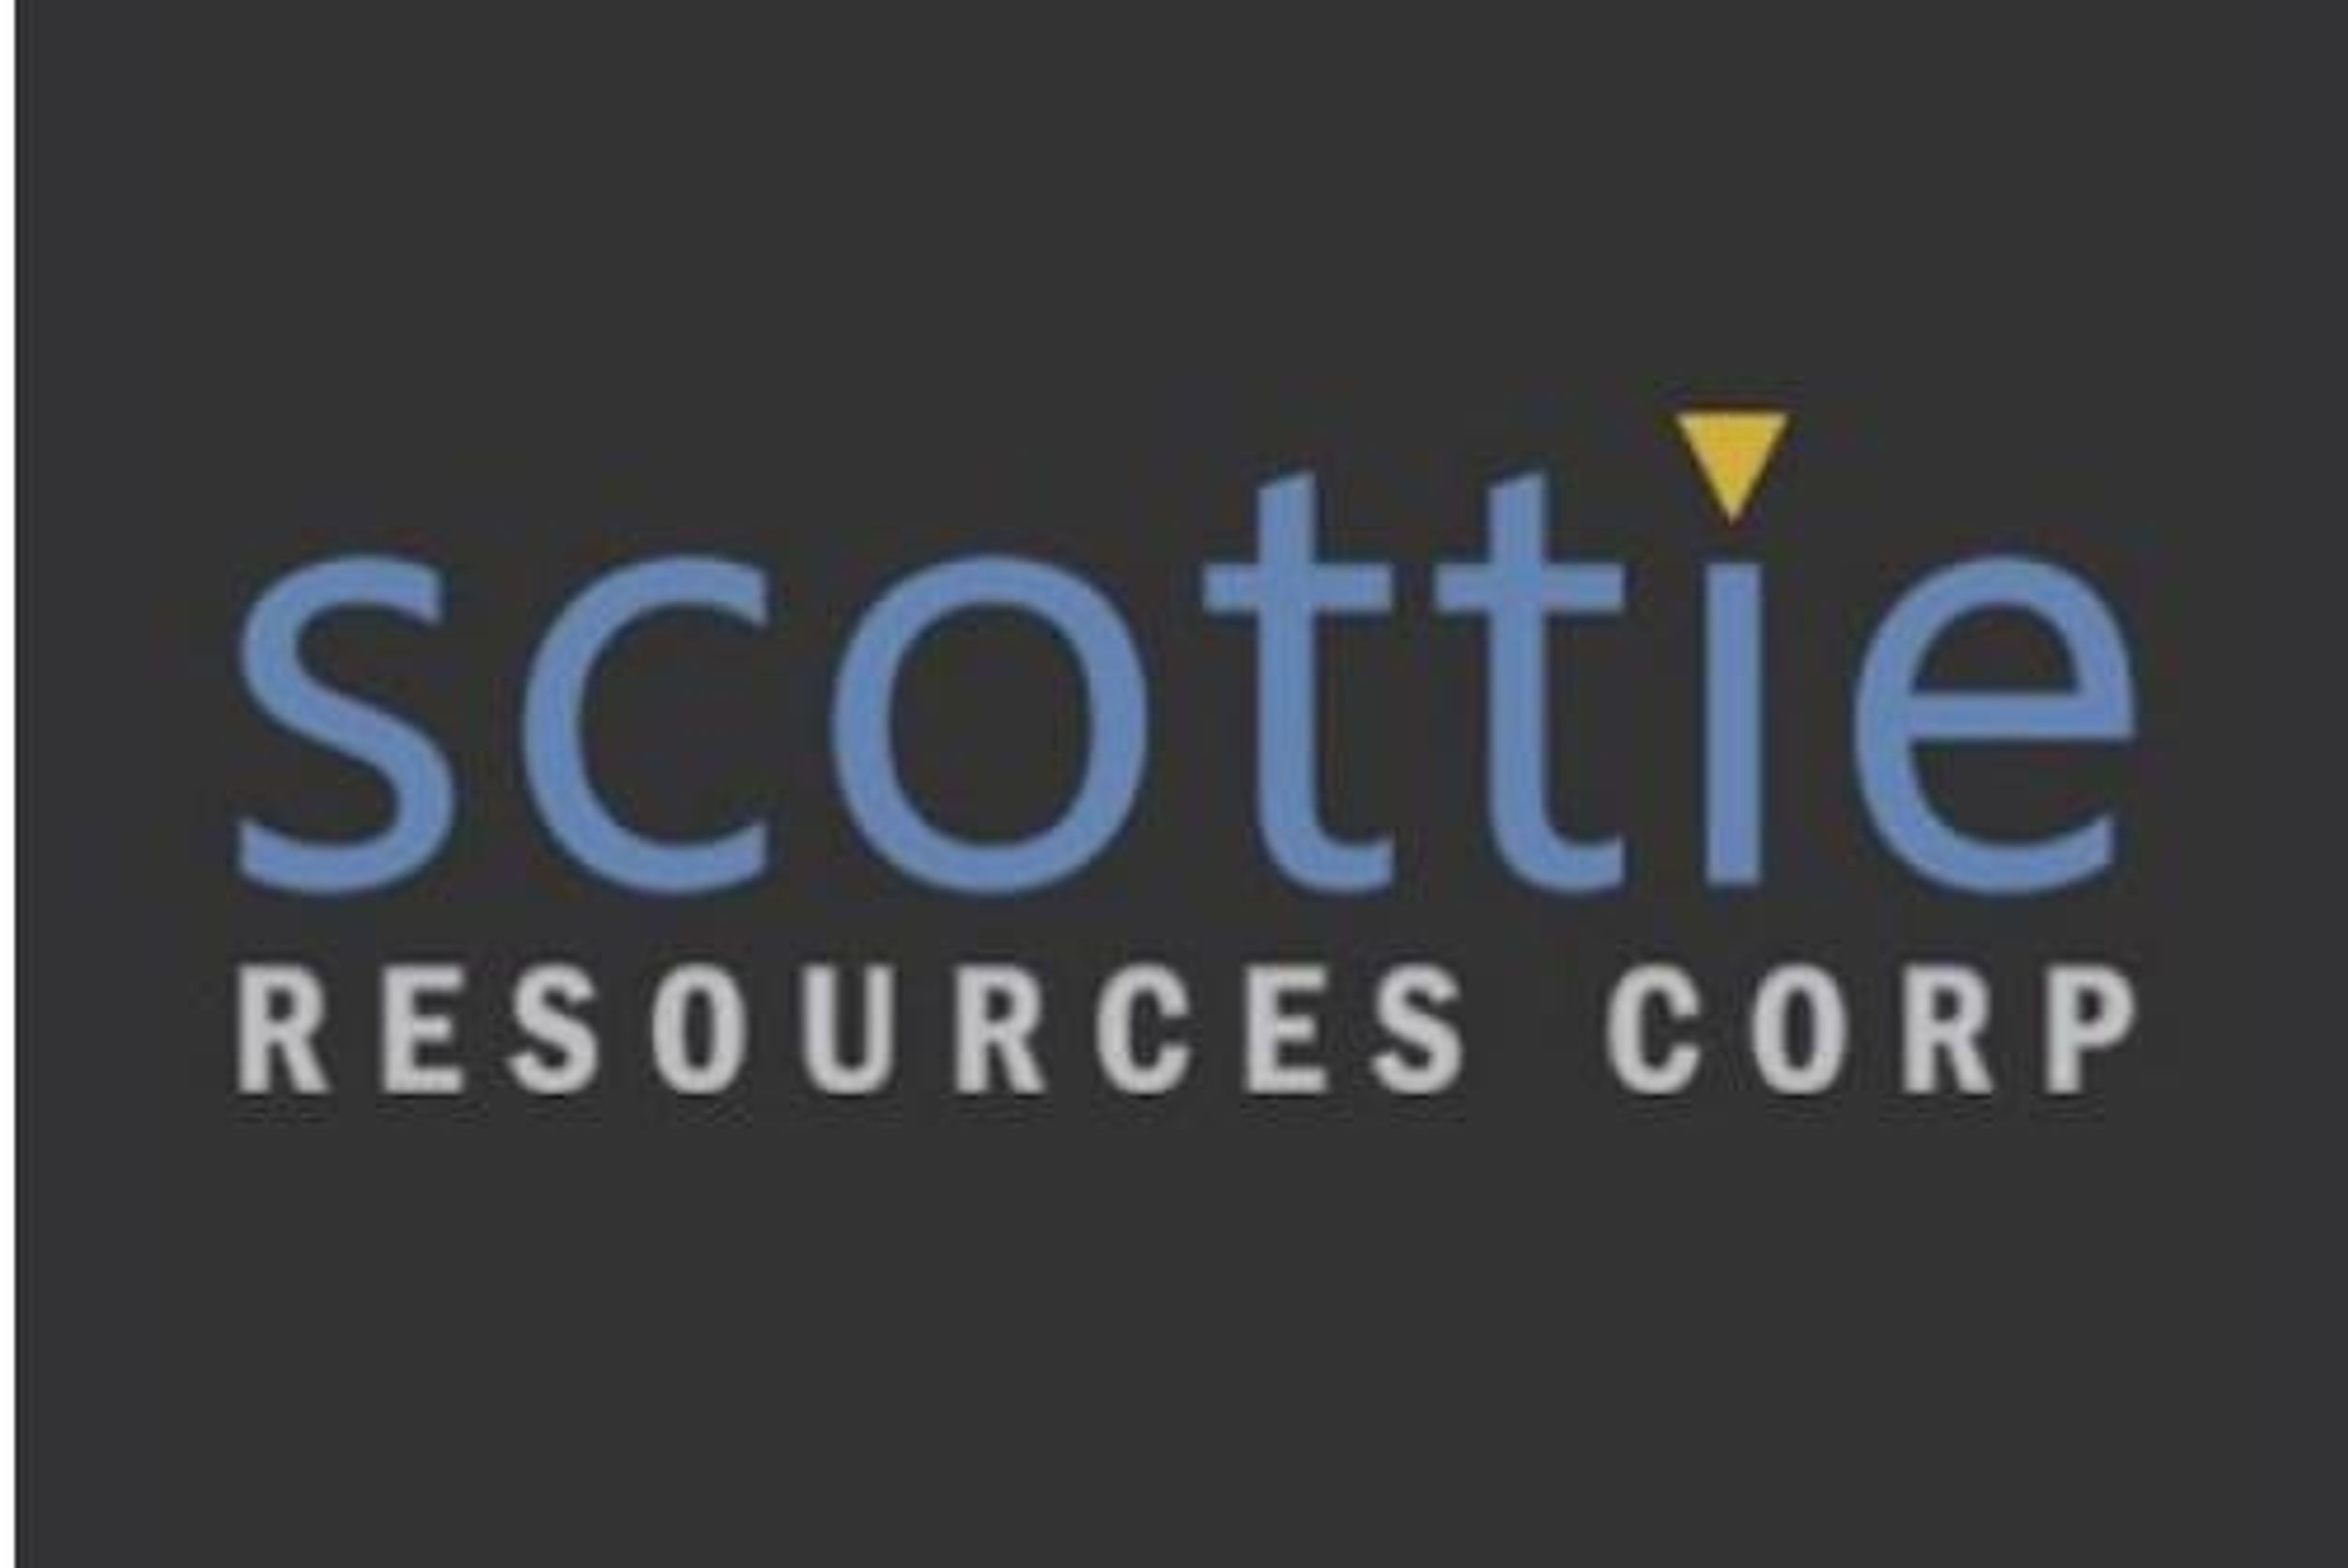 scottie resources corp